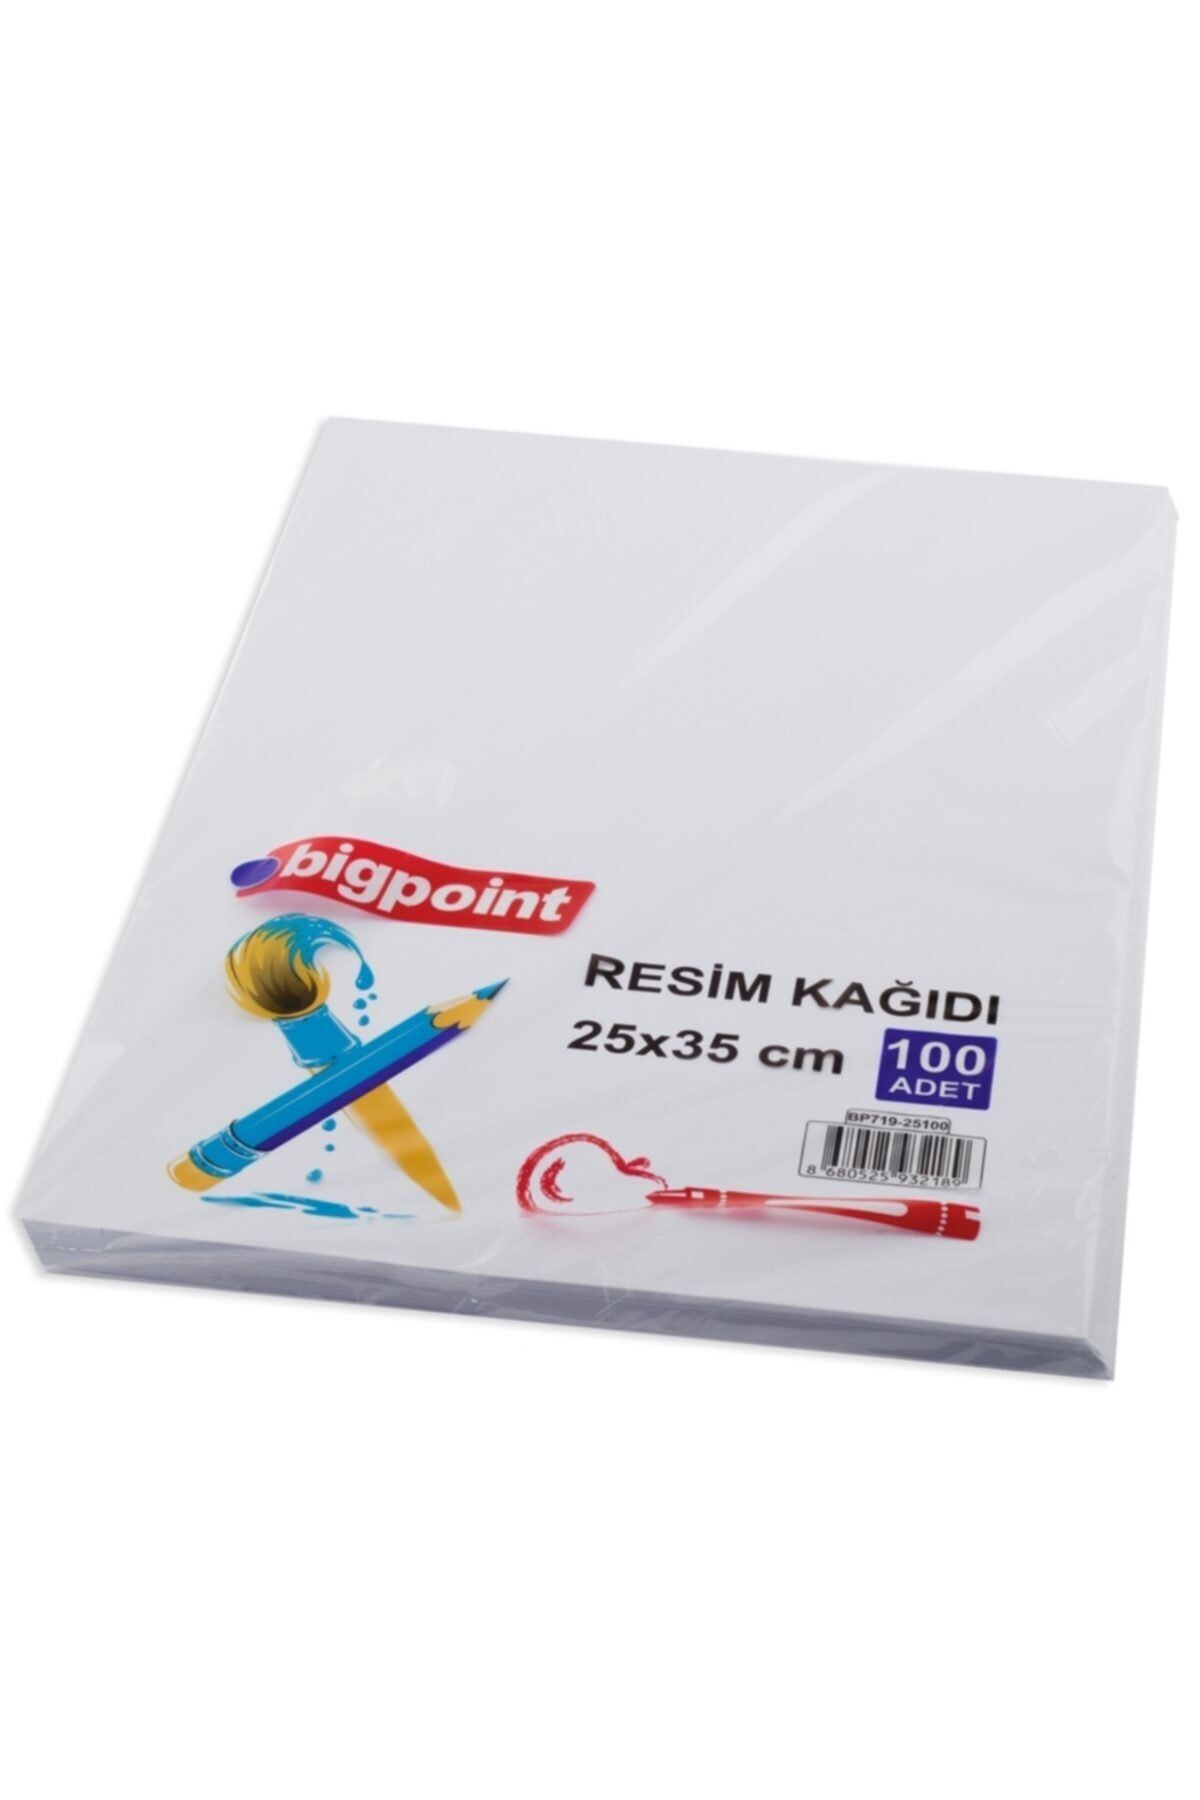 Bigpoint Resim Kağıdı 25x35cm 100'lü Paket